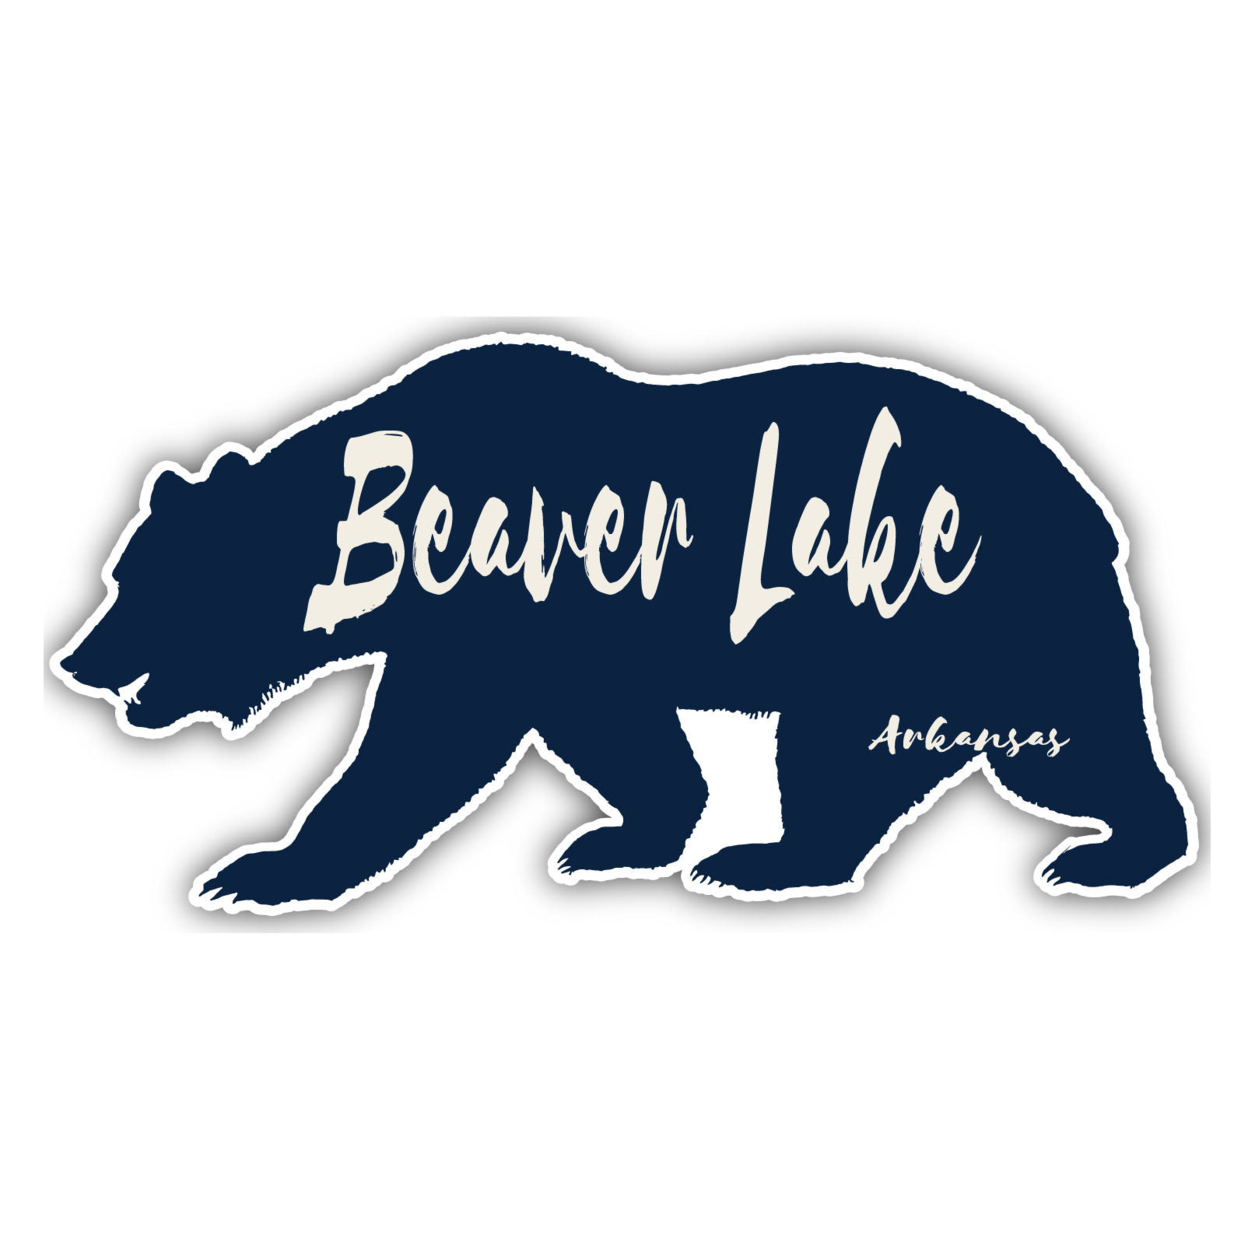 Beaver Lake Arkansas Souvenir Decorative Stickers (Choose Theme And Size) - Single Unit, 4-Inch, Adventures Awaits